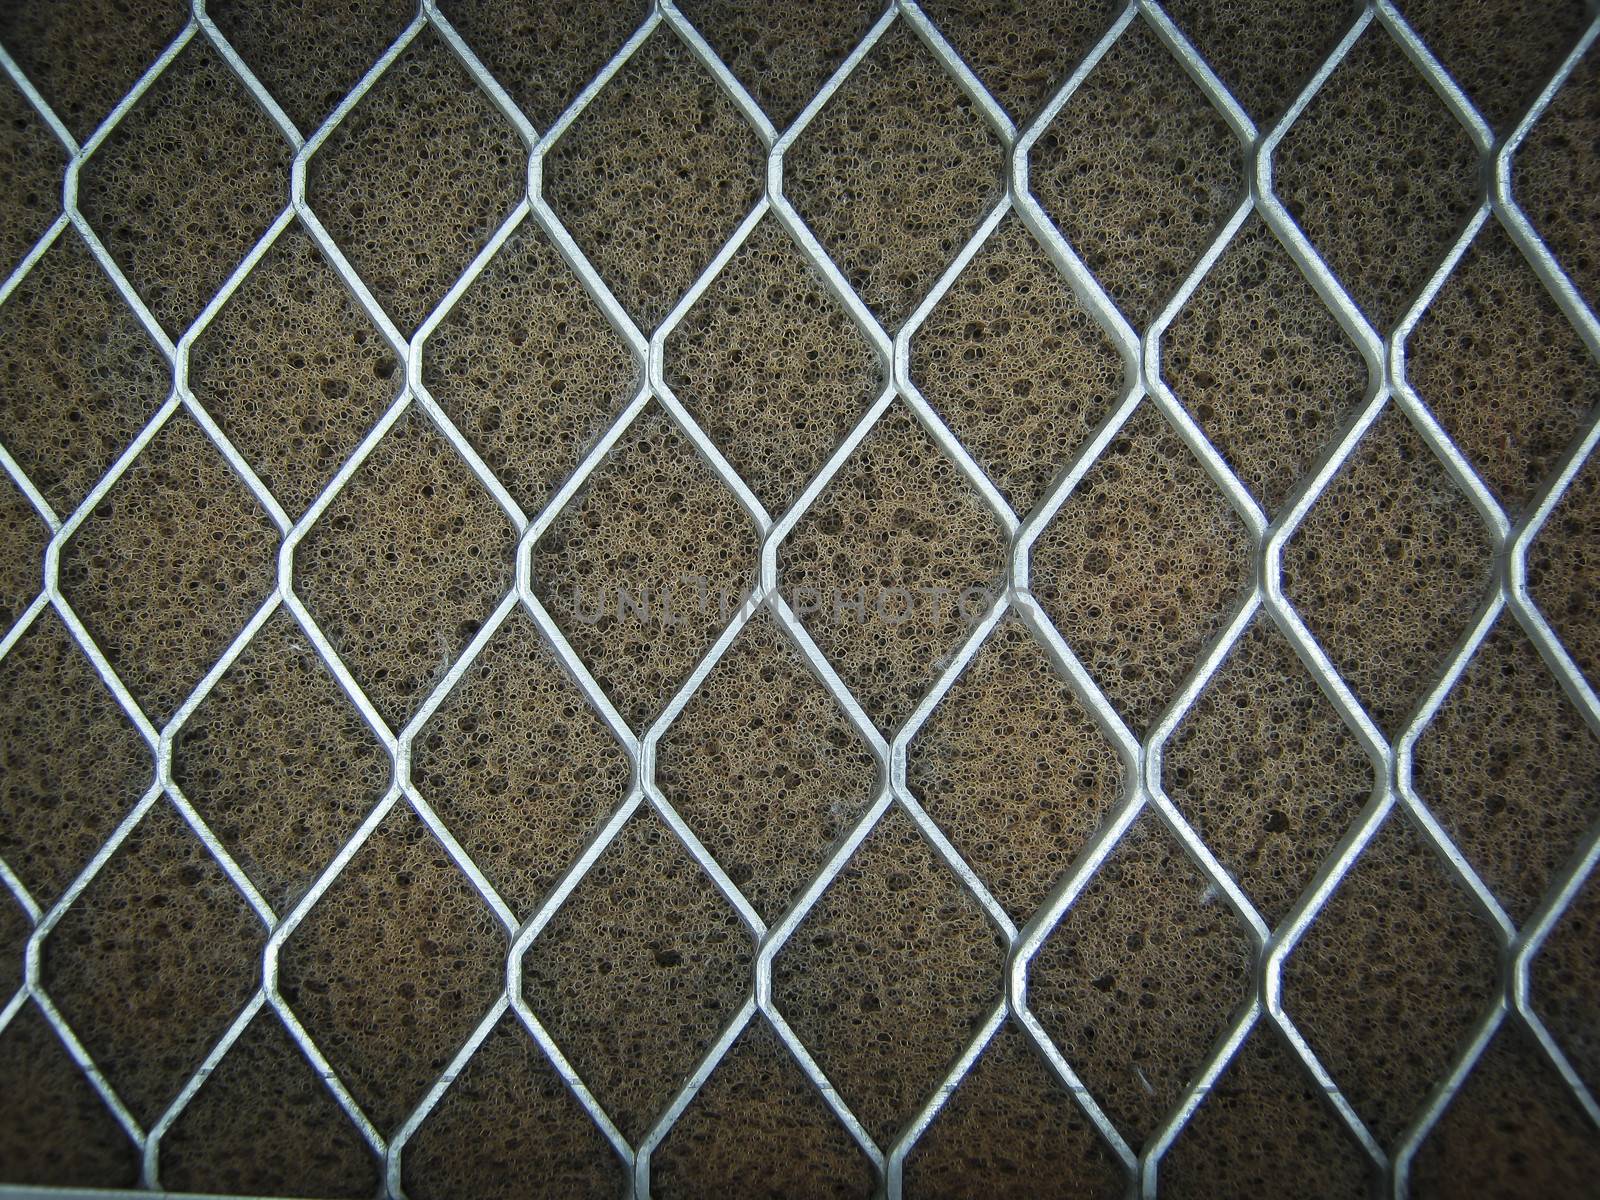 Chain Fence by Sorapop